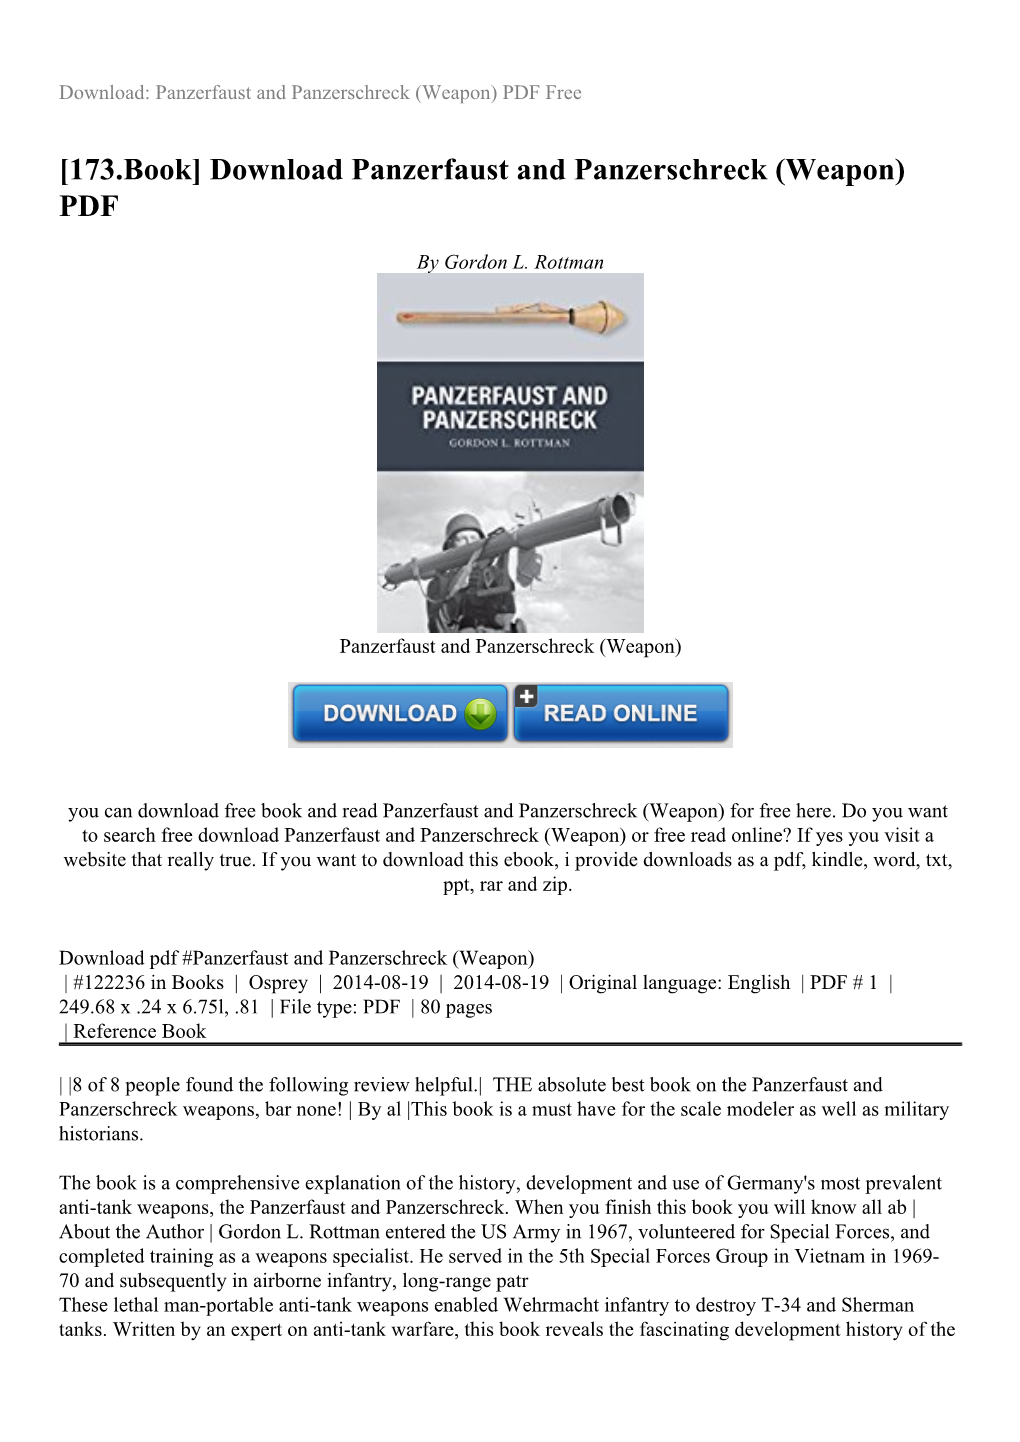 Download Panzerfaust and Panzerschreck (Weapon) PDF